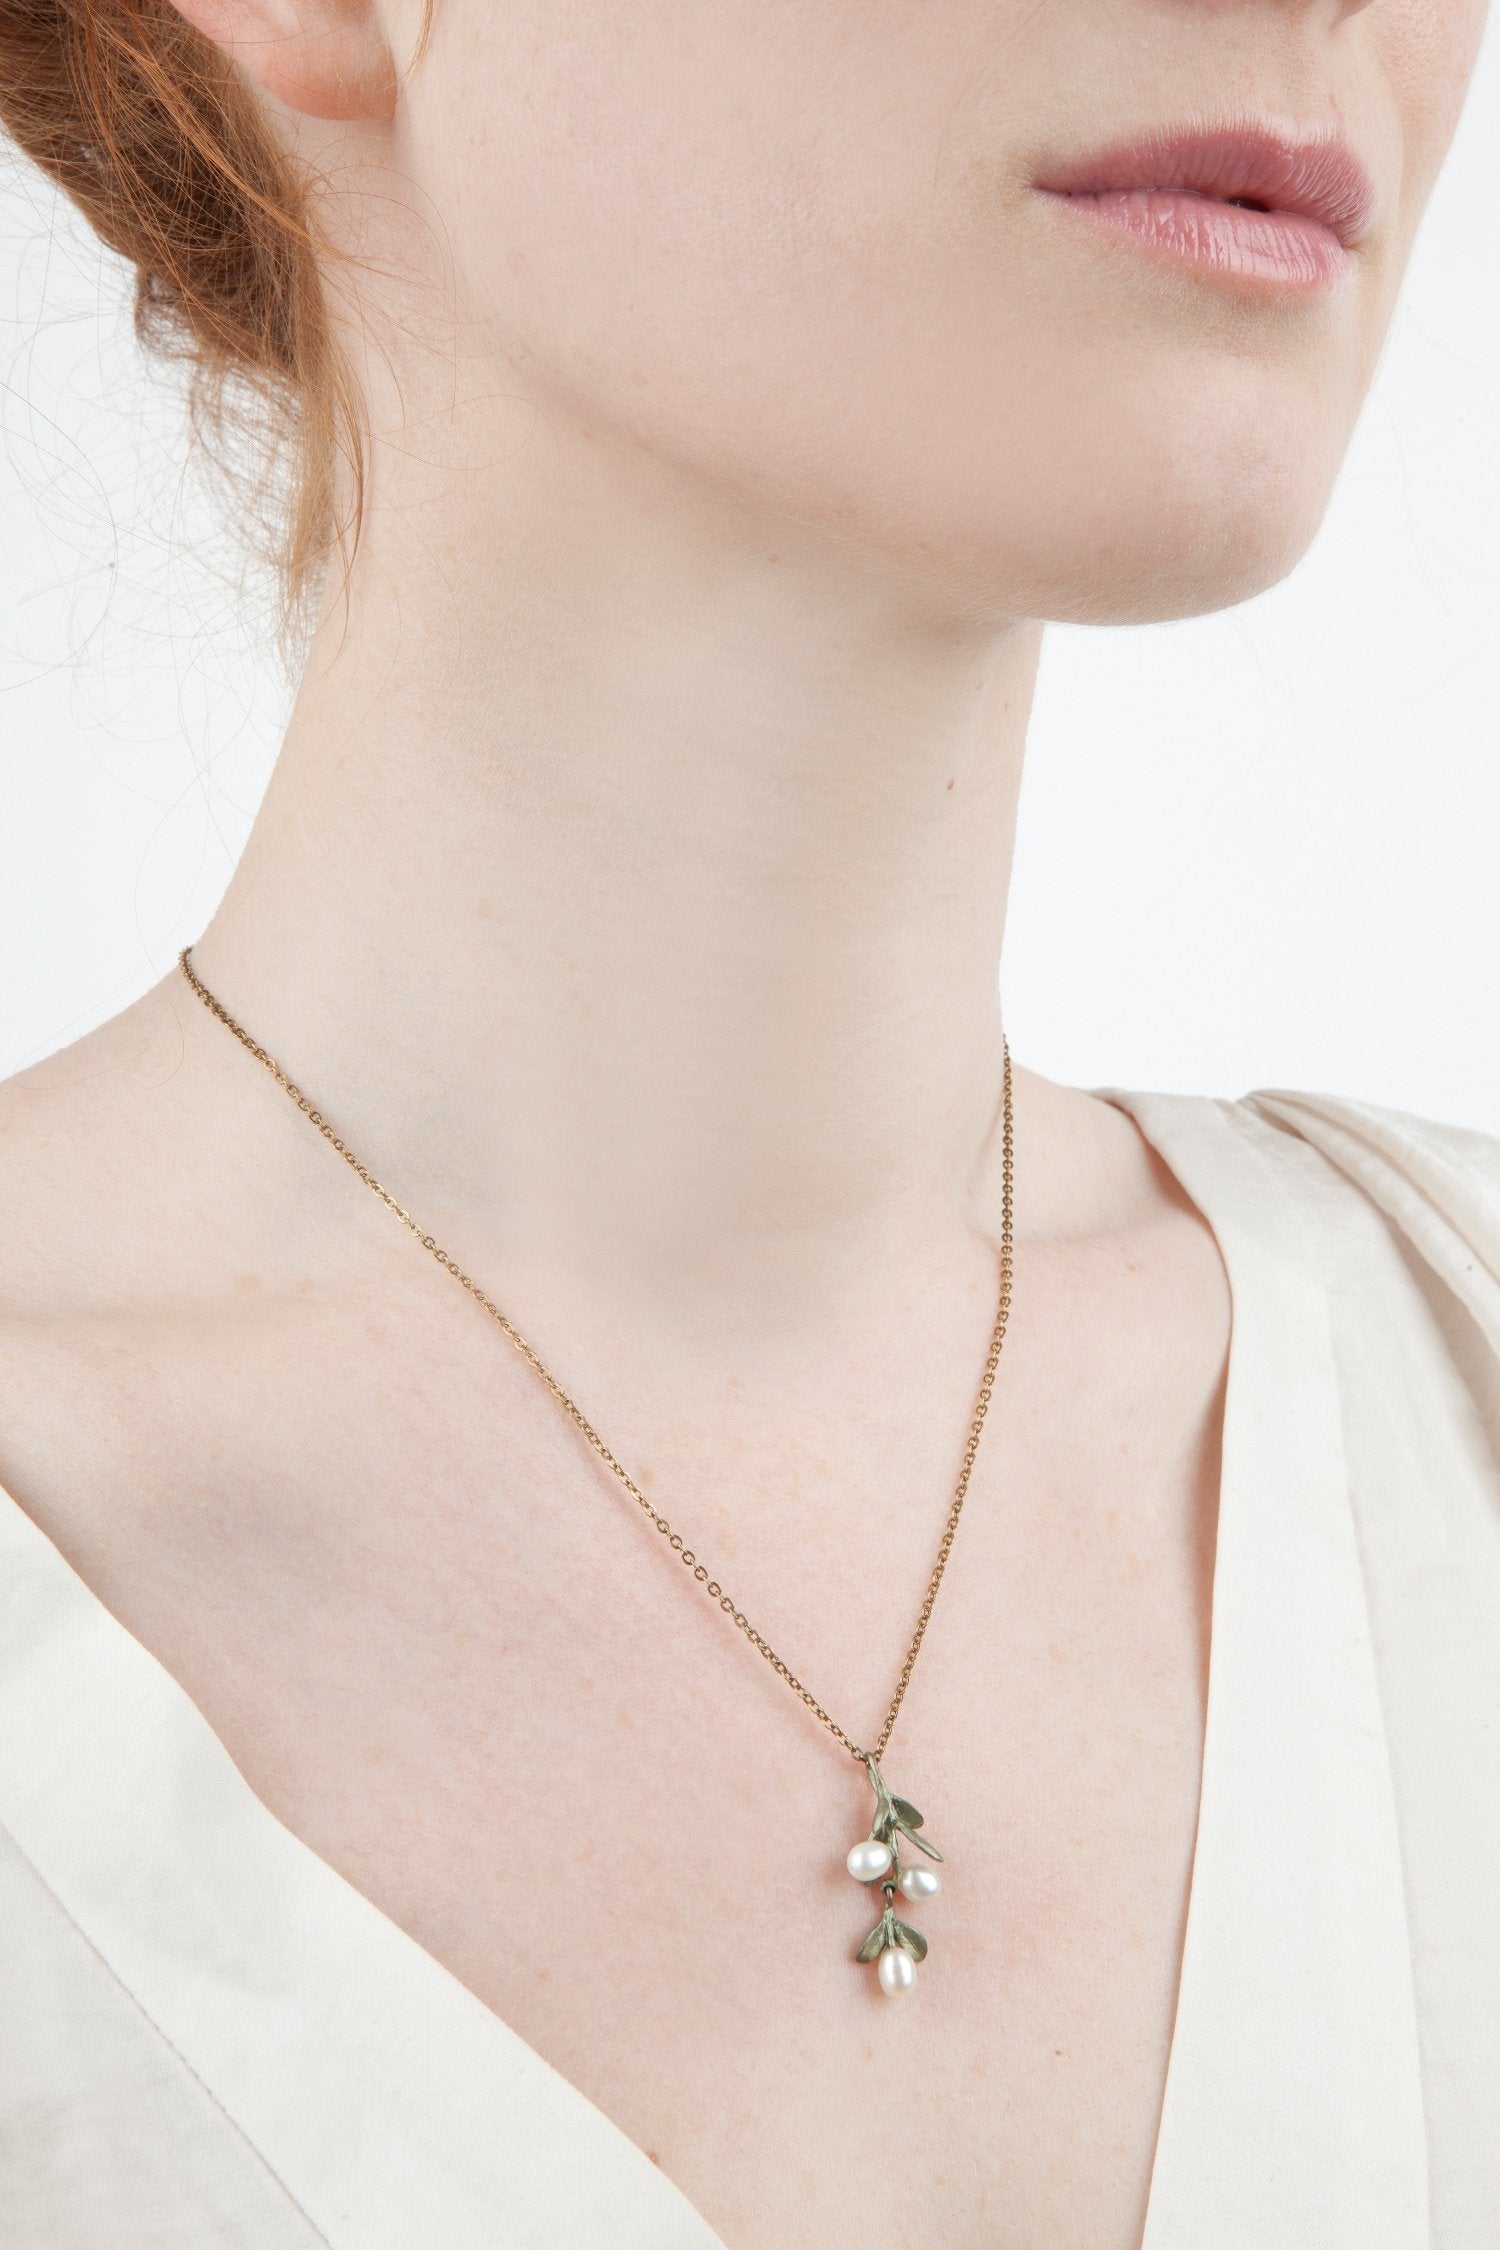 Boxwood Petite Pendant - The Nancy Smillie Shop - Art, Jewellery & Designer Gifts Glasgow